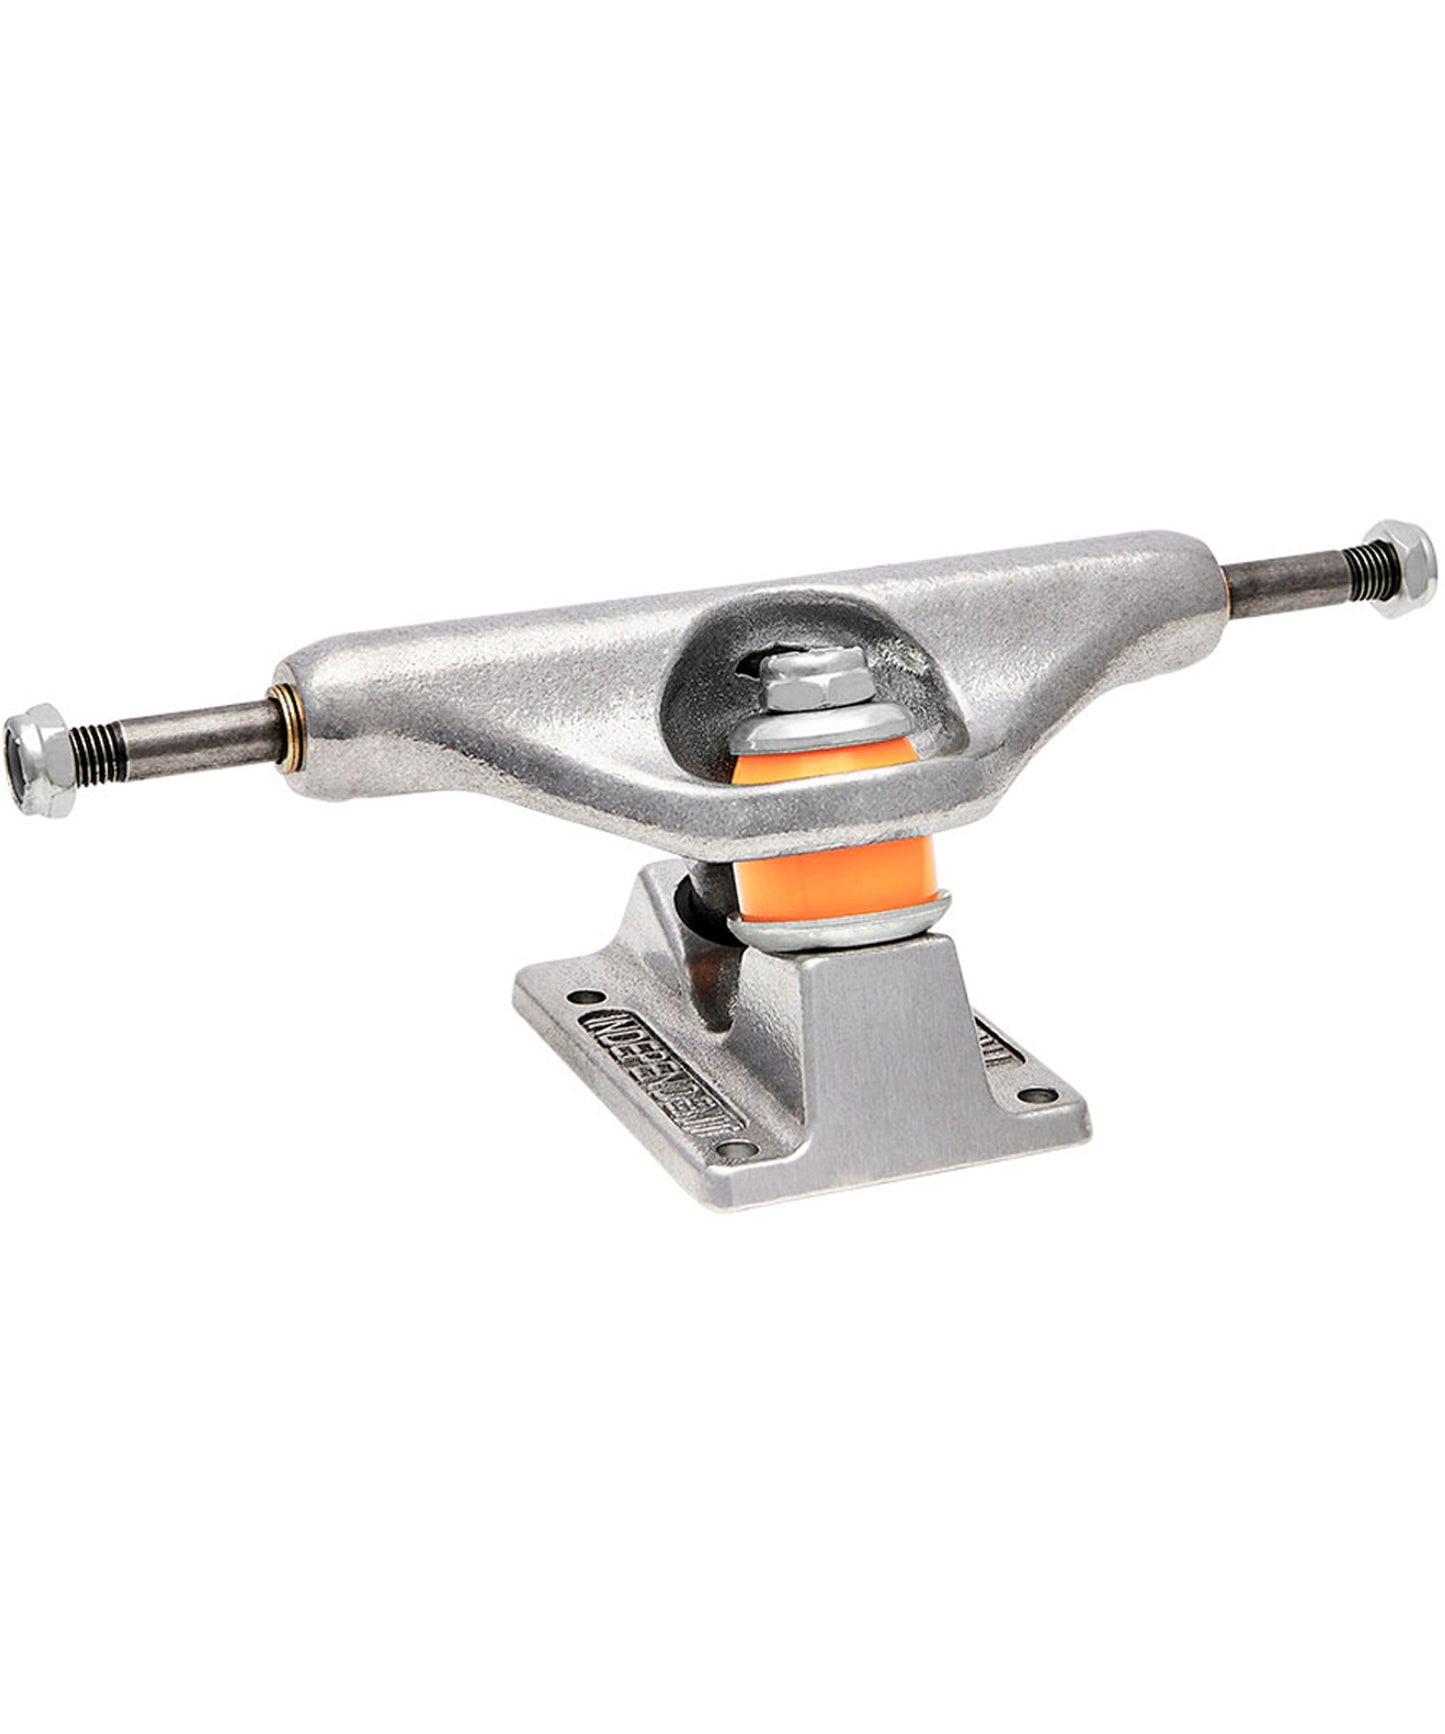 independent-Hollow-Silver-standard-159mm-ejes de calidad-para skate-hanger y placa base de aluminio-duraderos-independent-marca reputada en ejes.